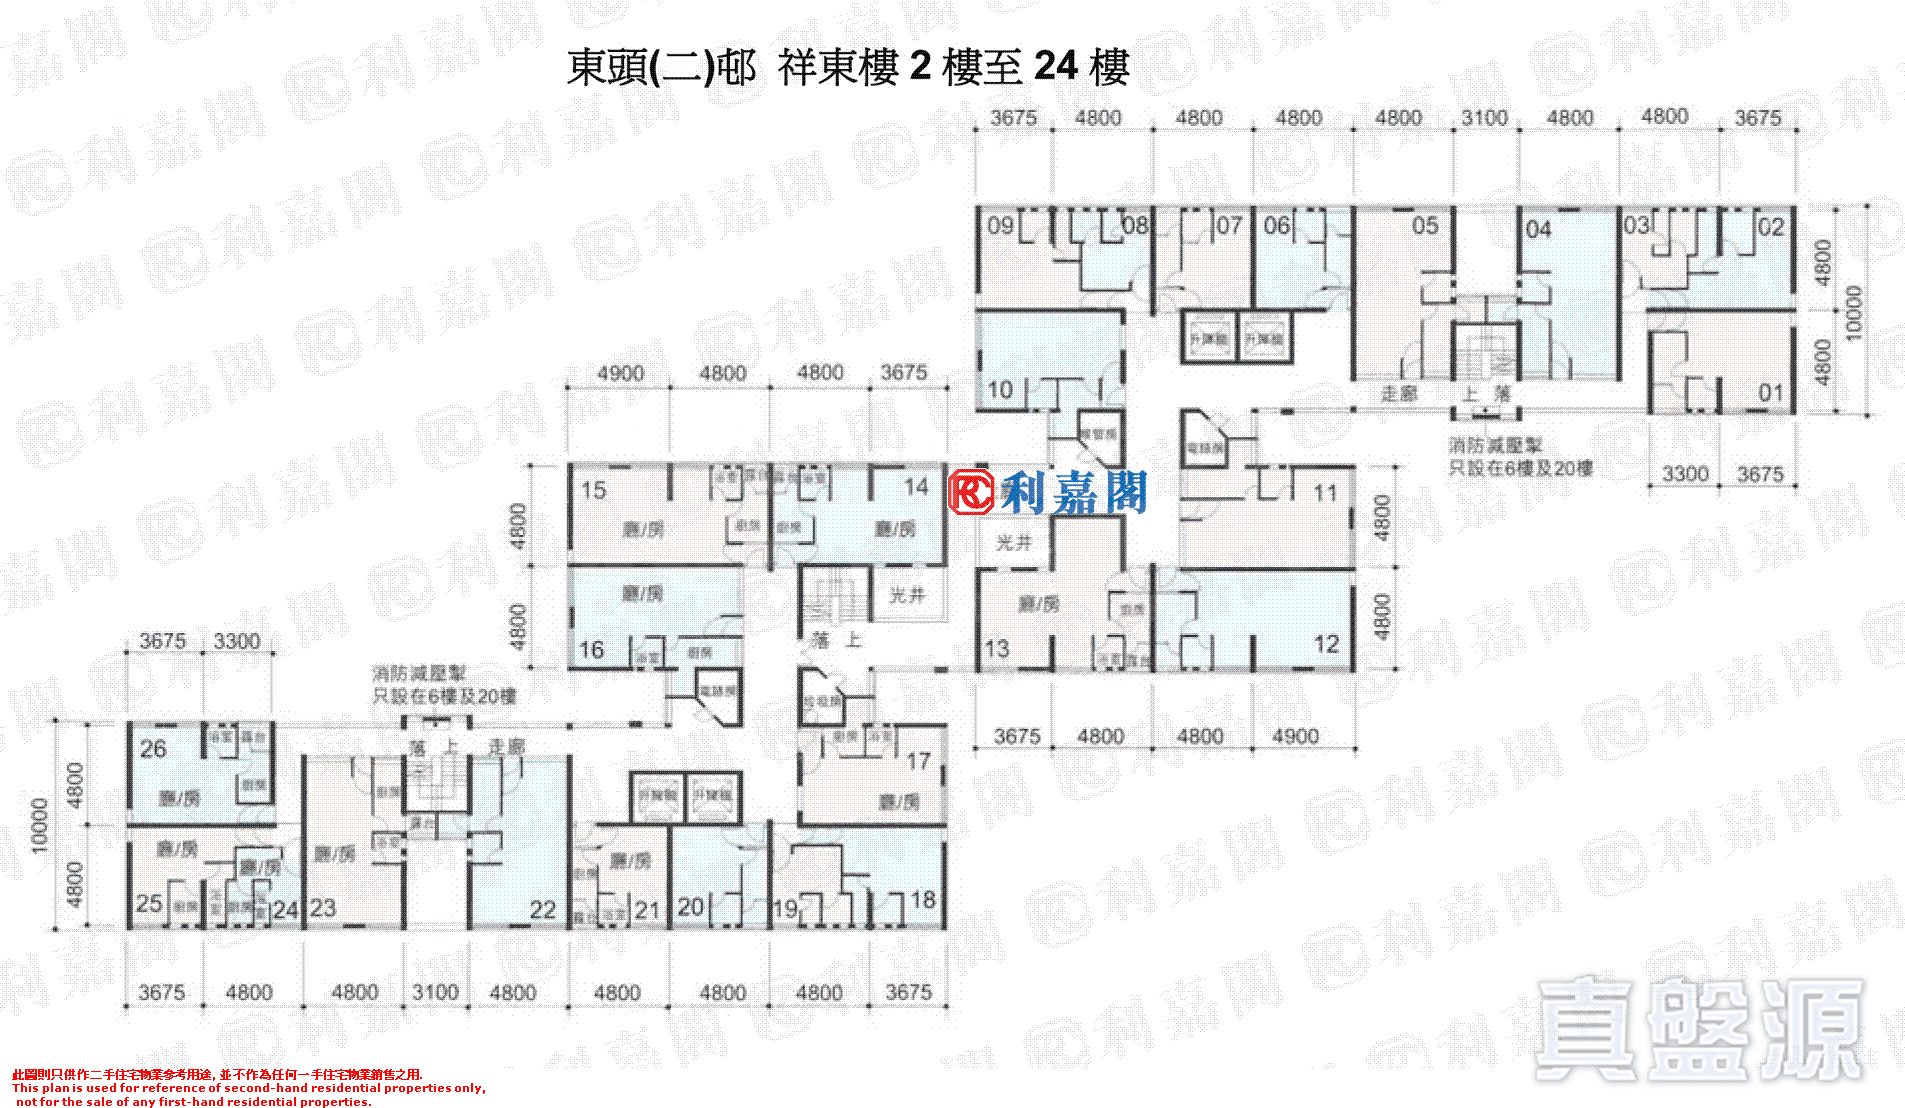 TUNG TAU (II) ESTATE Cheung Tung House Low Floor Zone Flat 10 Kowloon Bay/Ngau Chi Wan/Diamond Hill/Wong Tai Sin